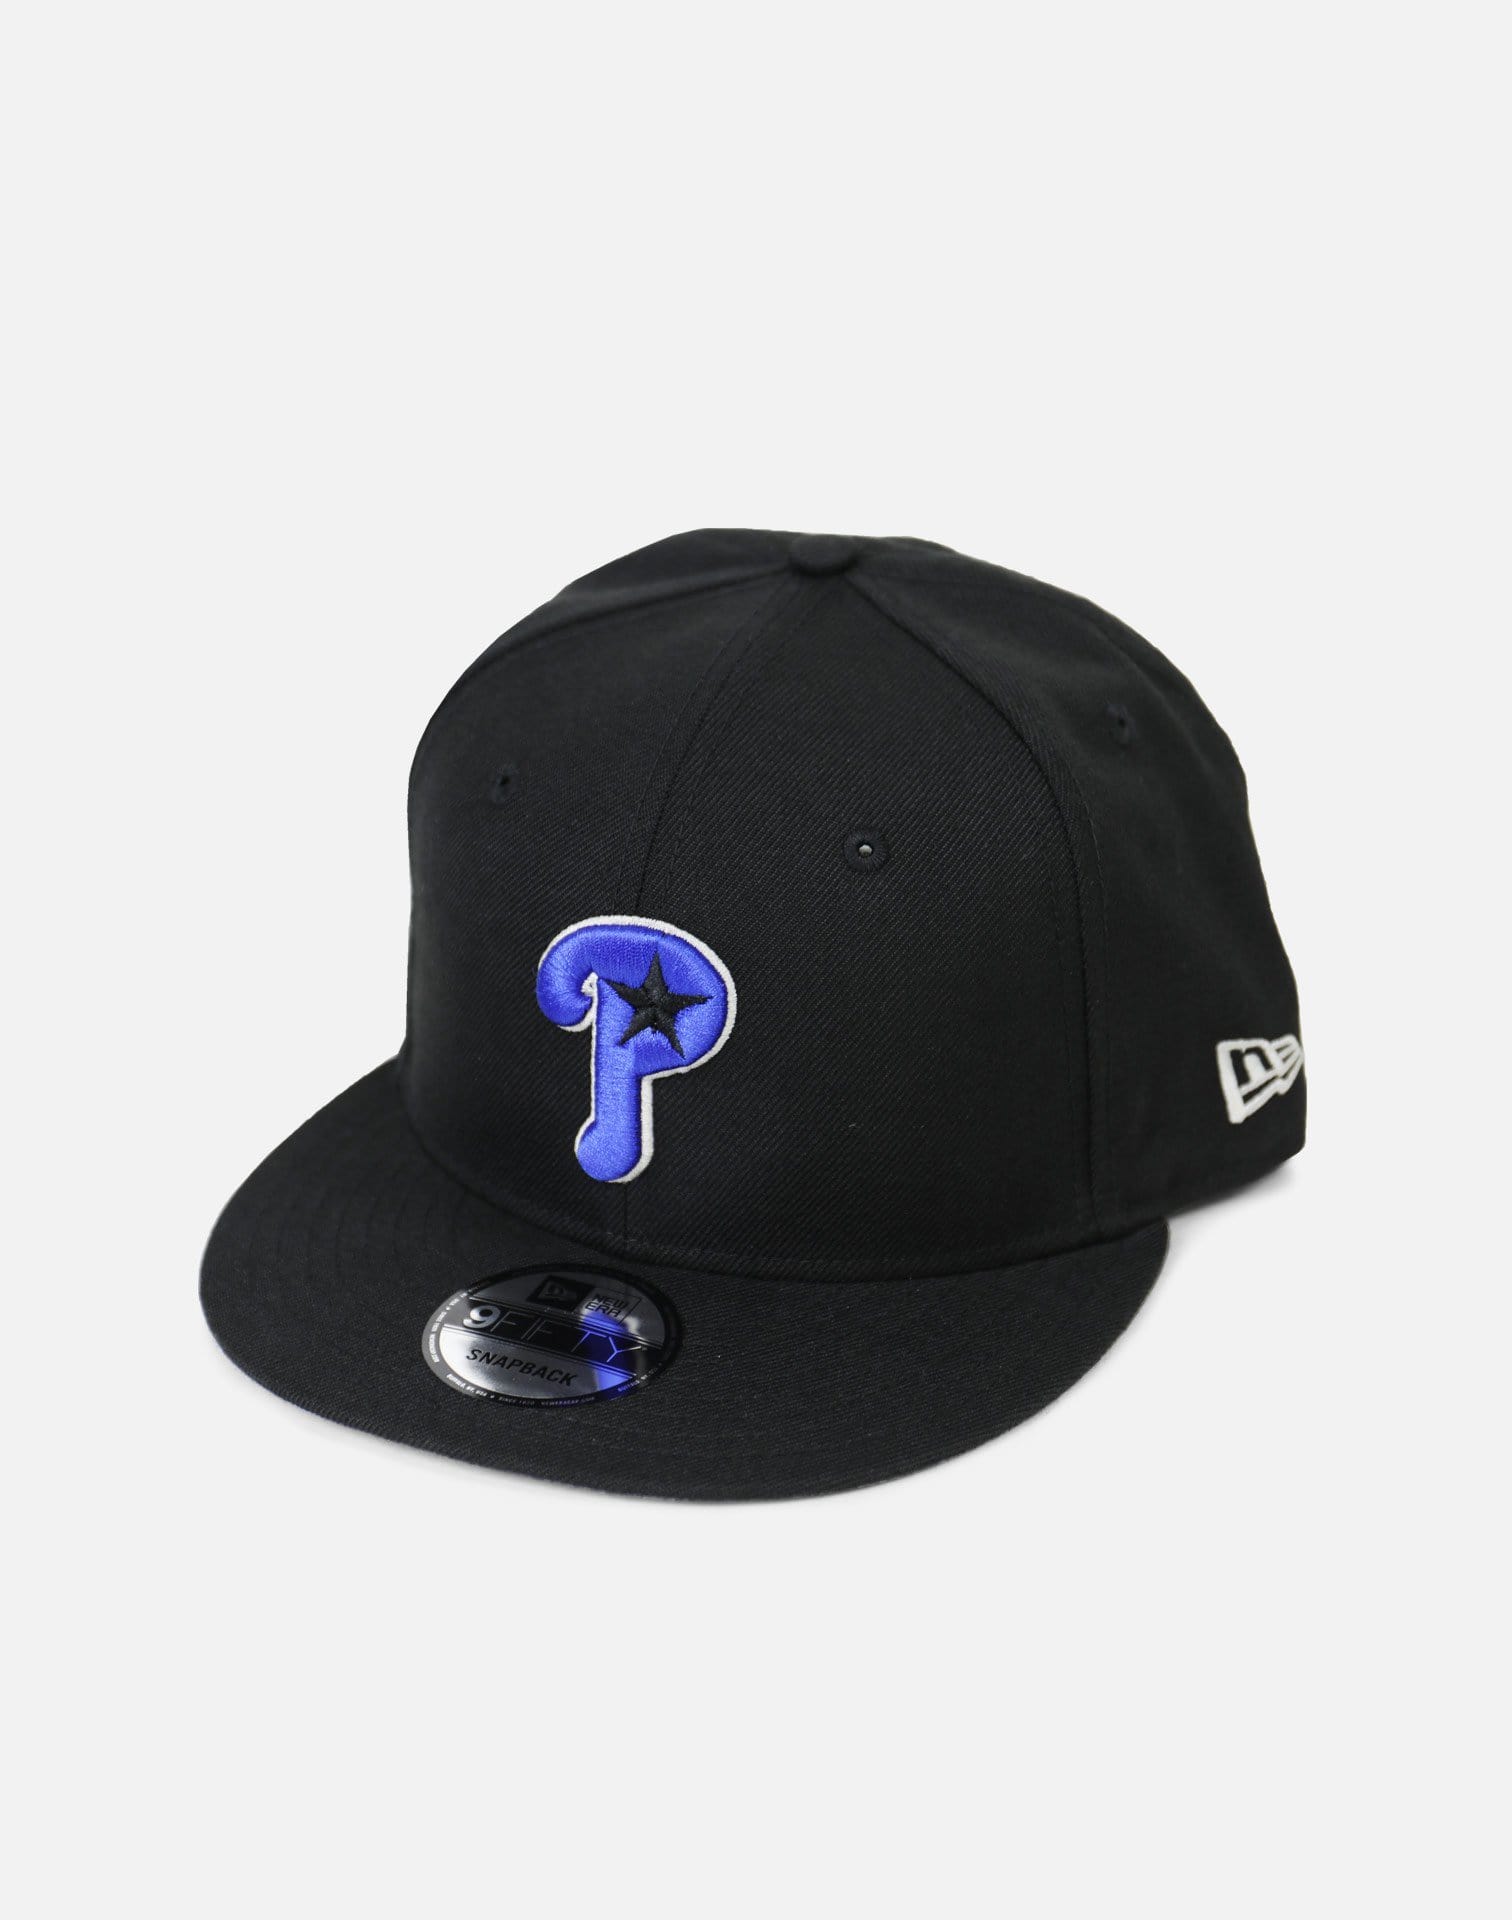 New Era Philadelphia Phillies Royal Hook Snapback Hat (Black/Royal)